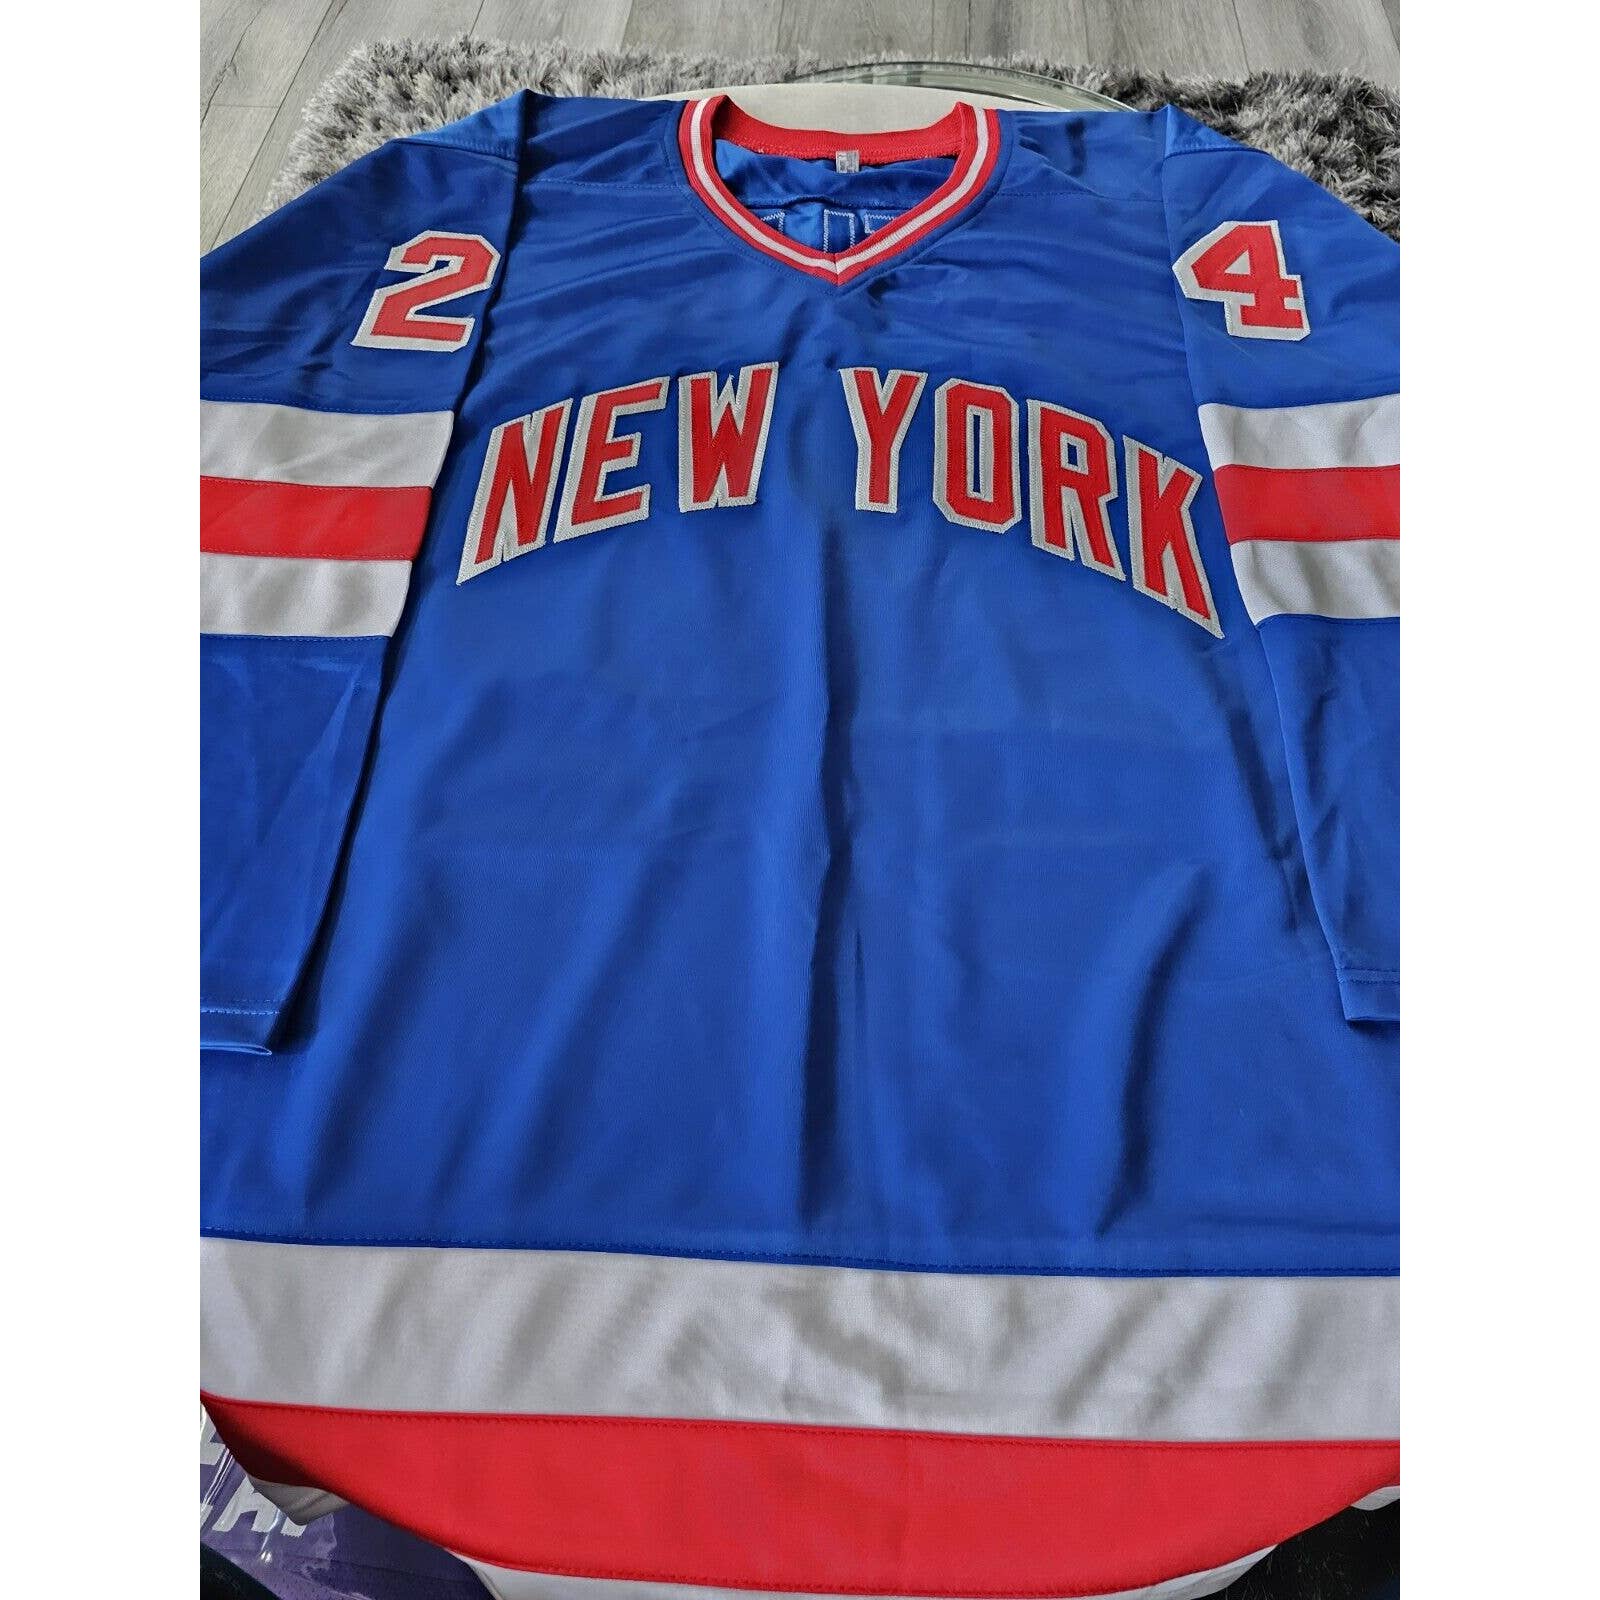 Jay Wells Autographed/Signed Jersey JSA COA New York Rangers - TreasuresEvolved